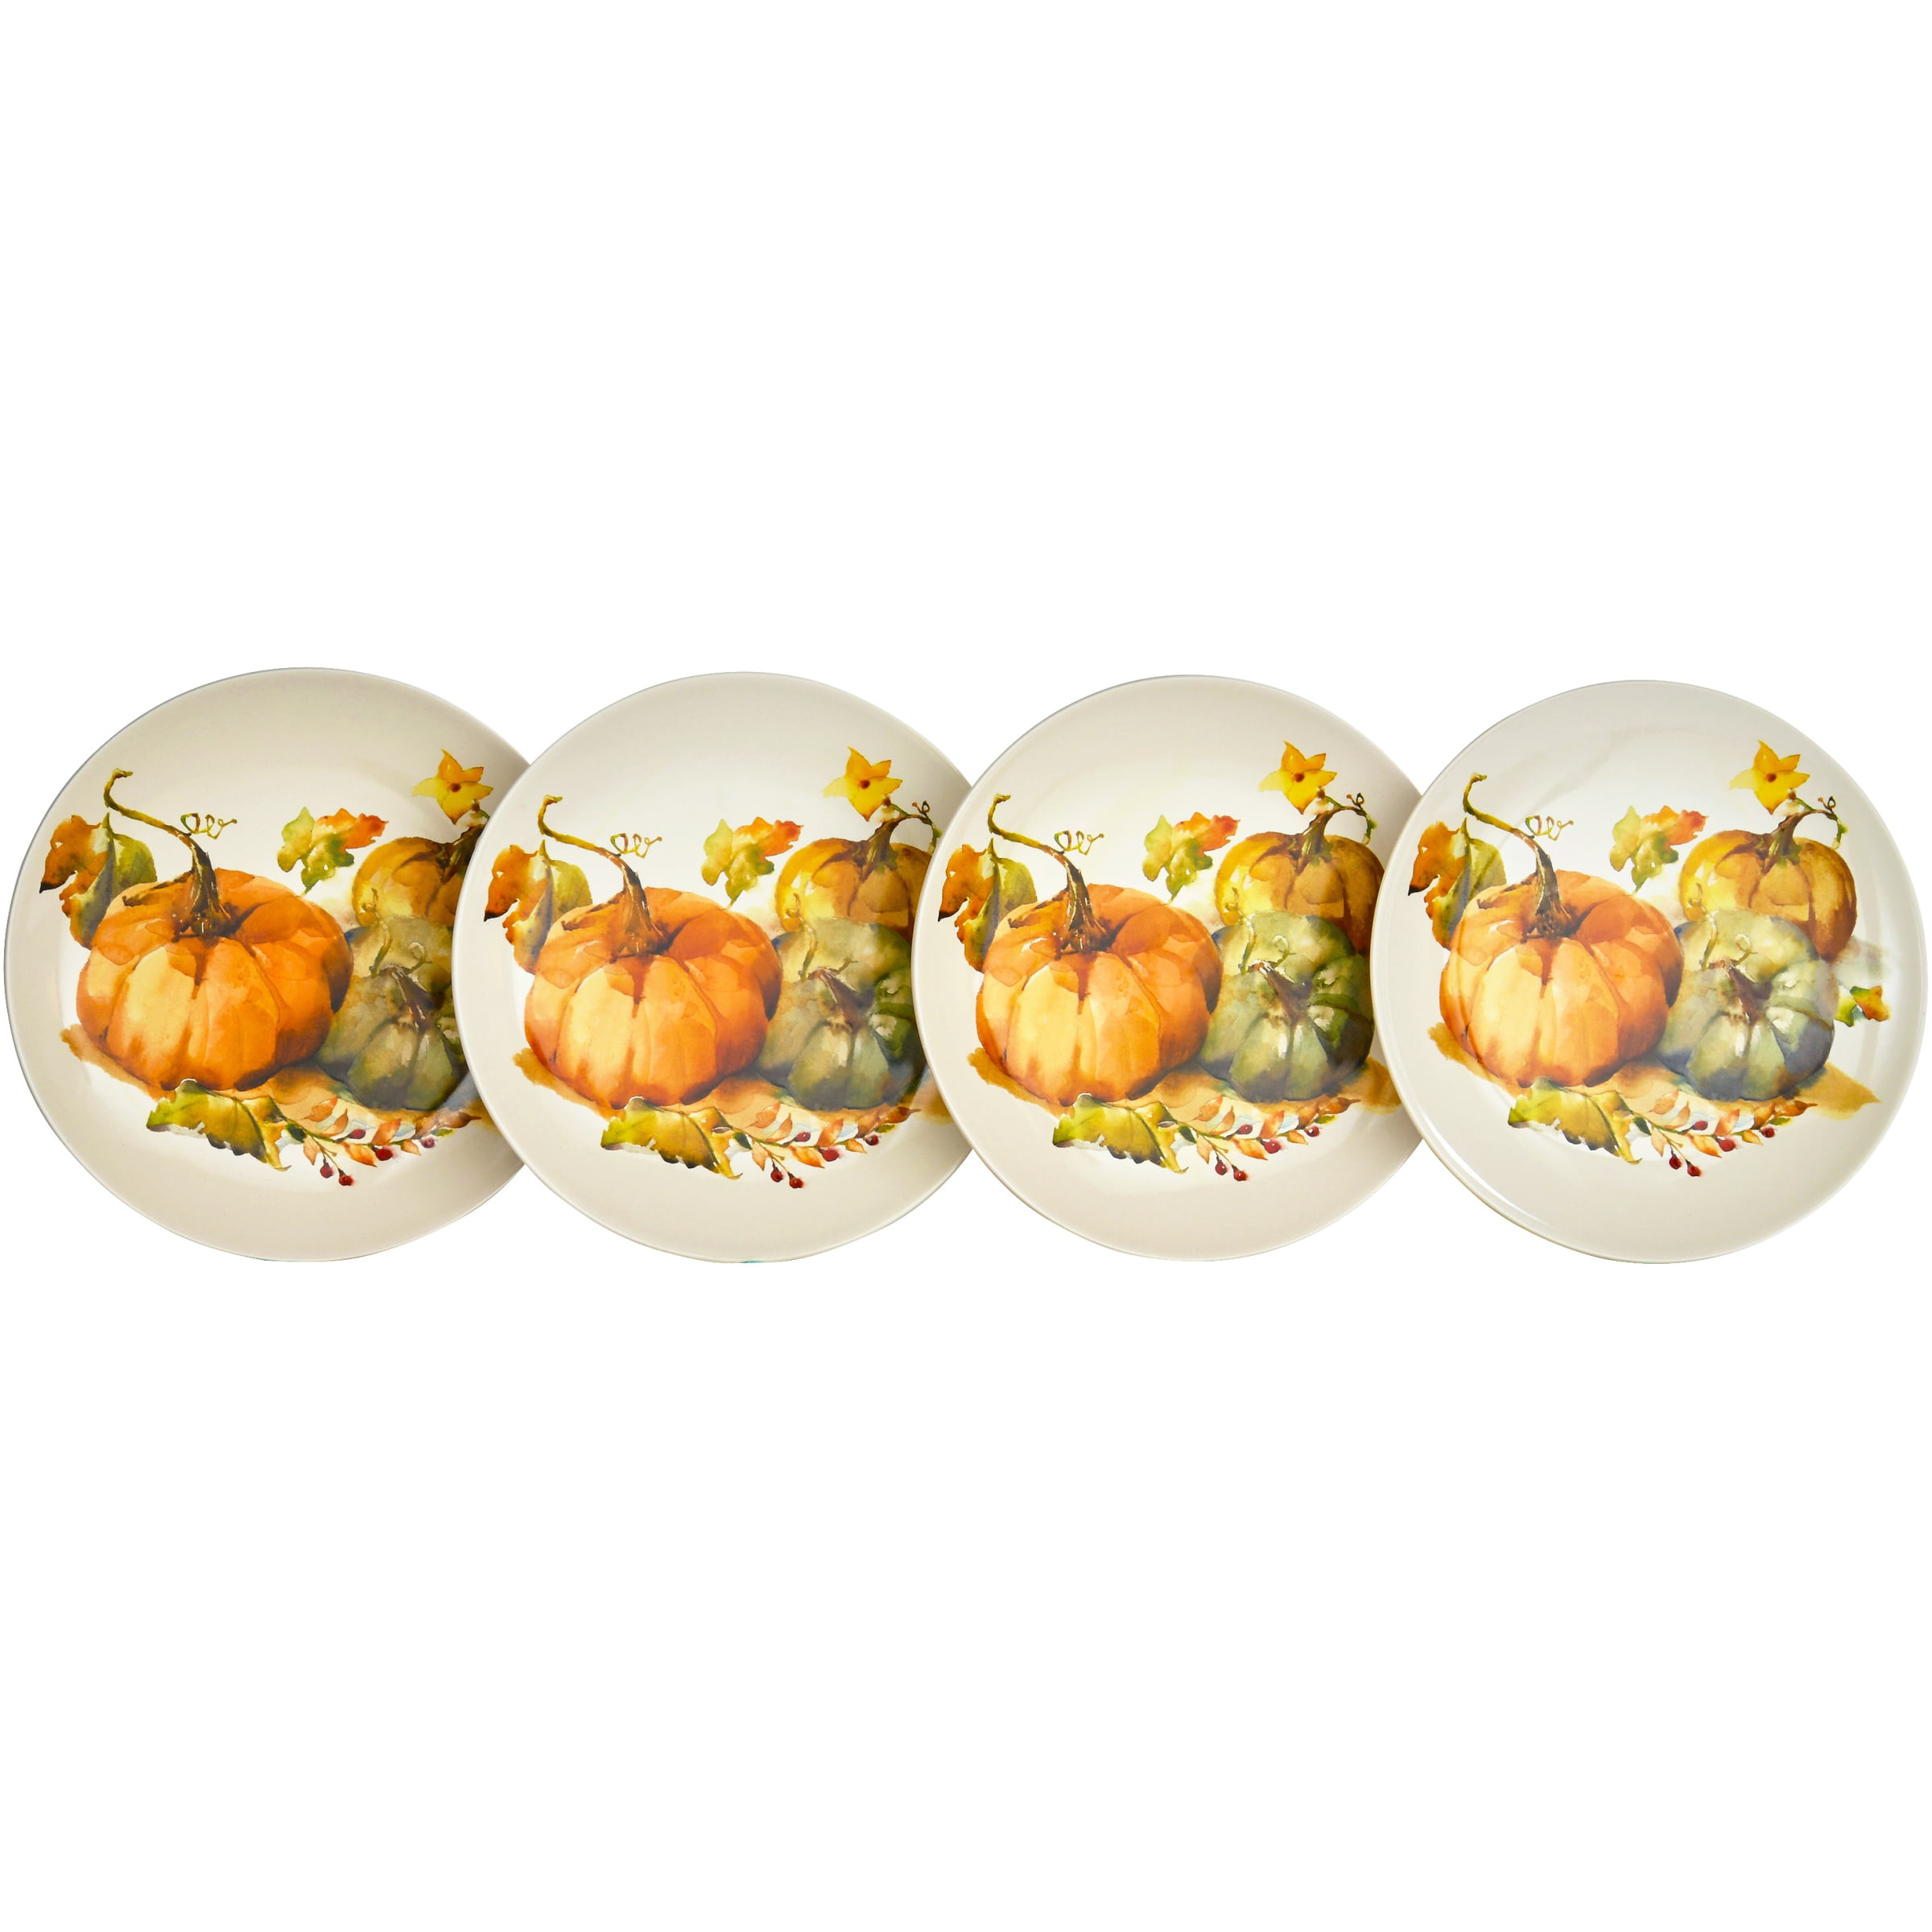 Spectrum Harvest Celebration Pumpkin 6 Appetizer Plates Set of Four Brand New Dishwasher Safe Microwave Safe Thanksgiving Fall Plates